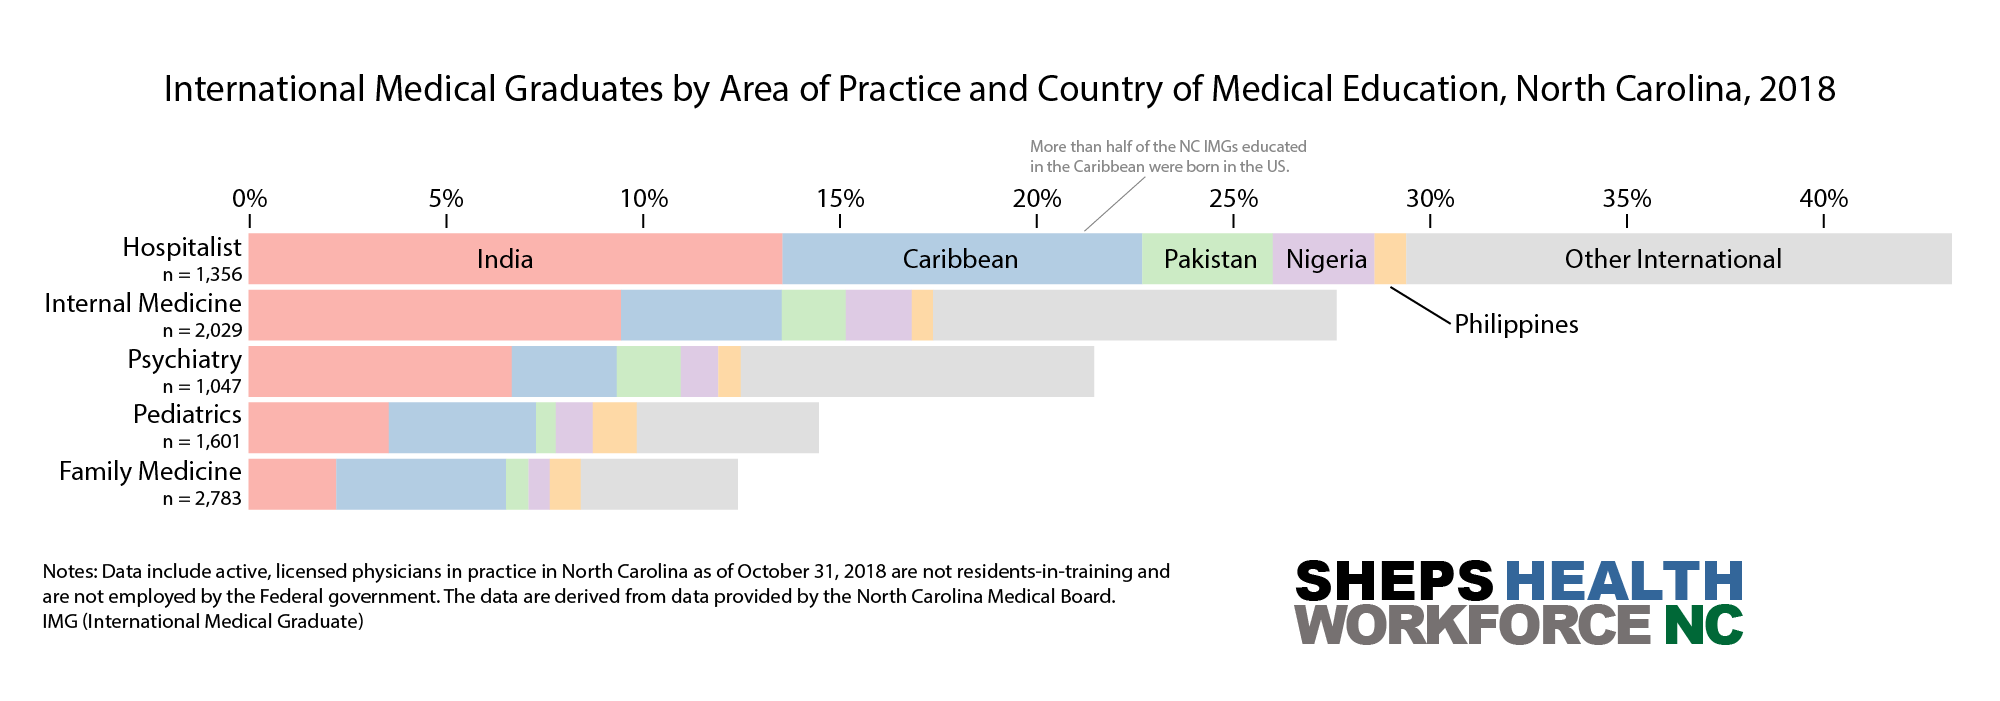 Over 40% of hospitalists are international medical graduates.